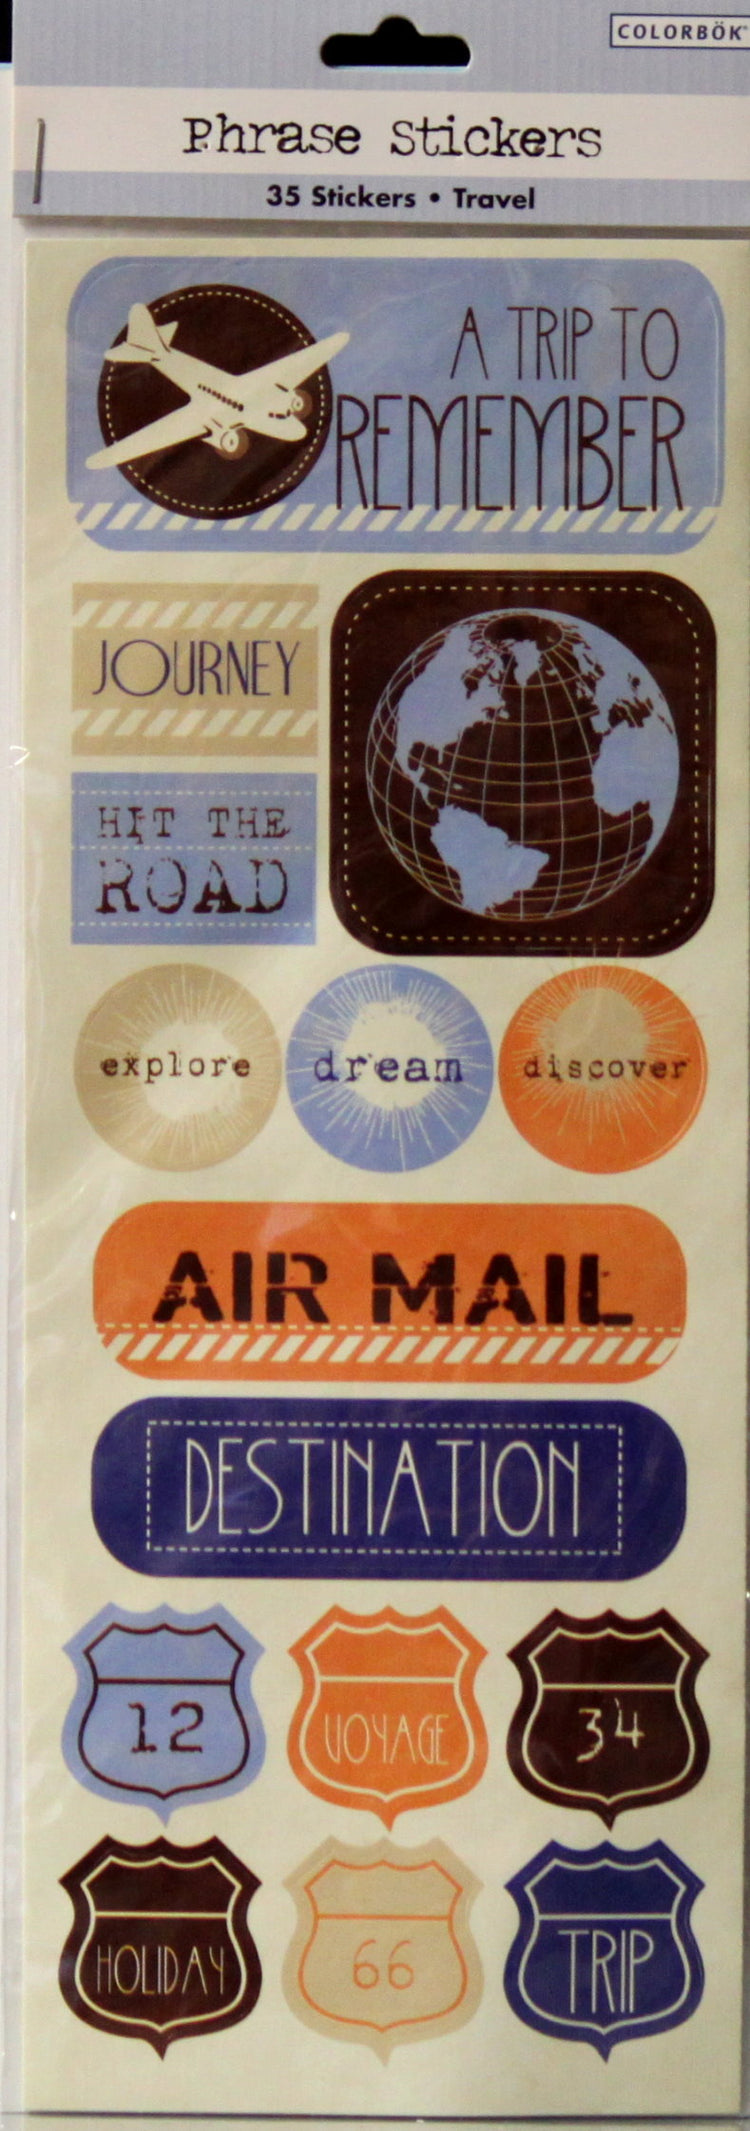 Colorbok Travel Phrase Stickers